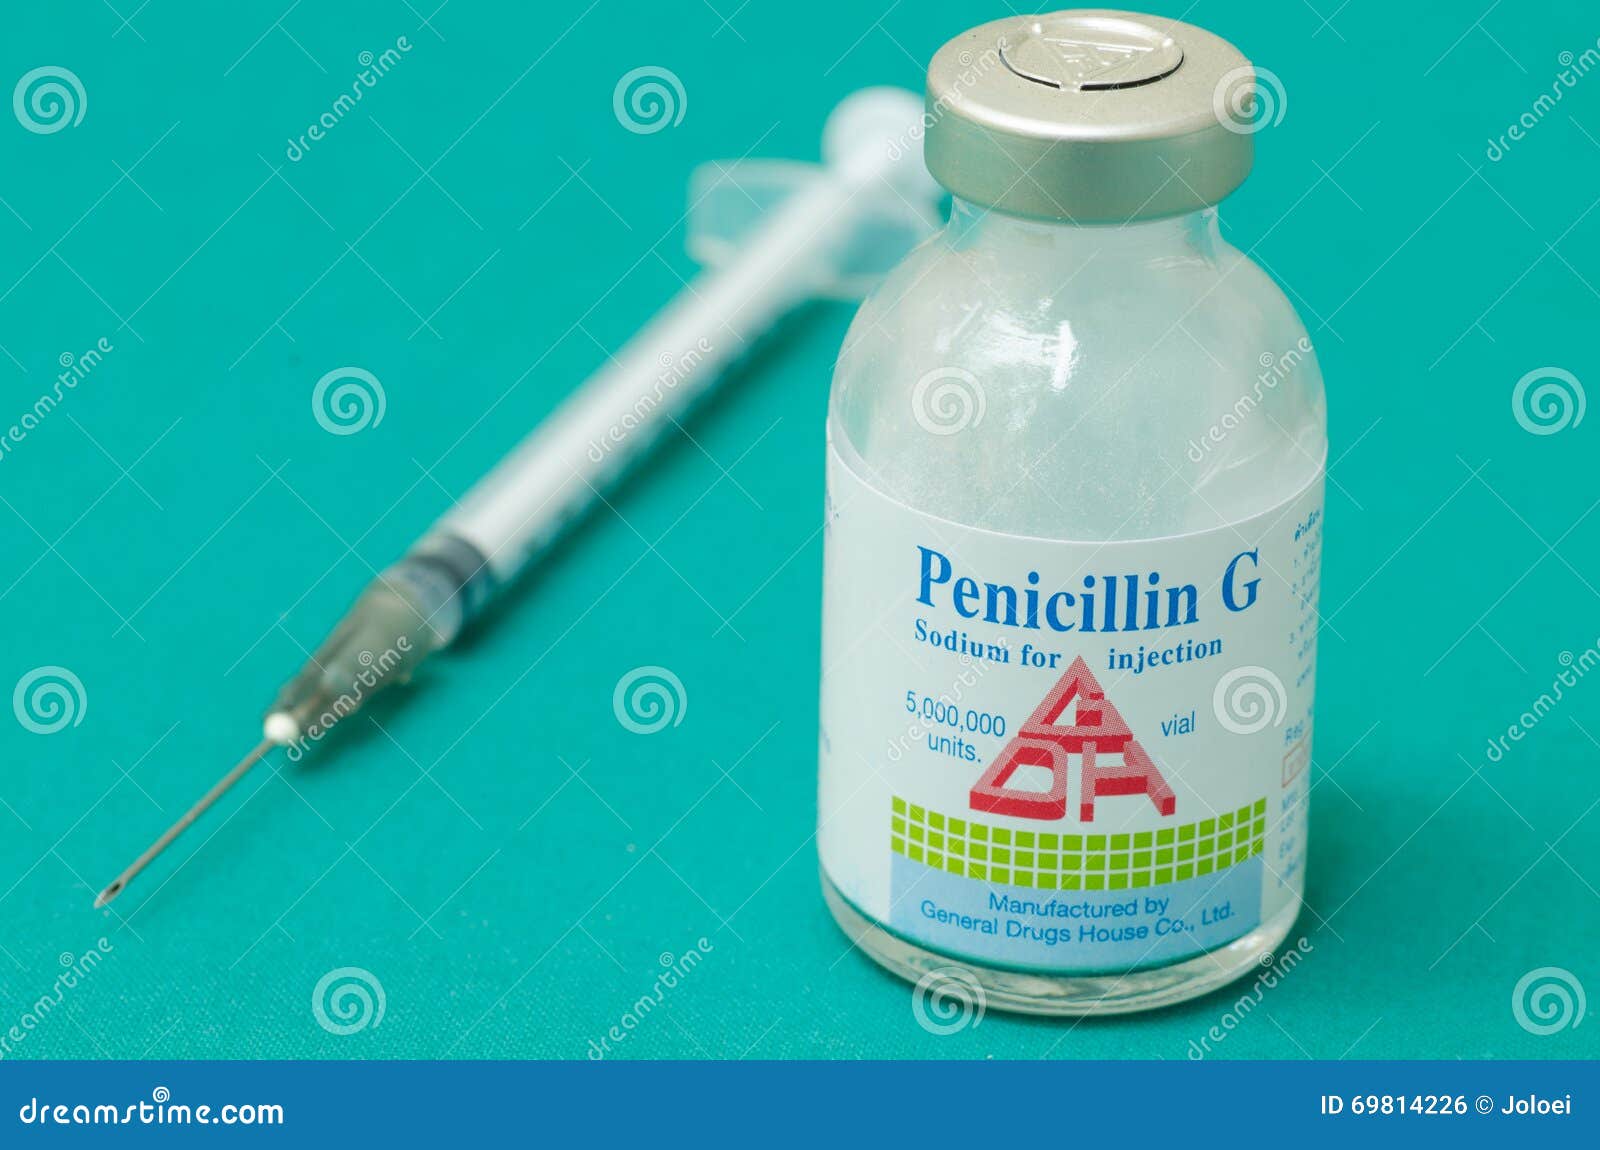 close-up-penicillin-g-injection-loei-thailand-april-vial-manufactured-general-drugs-house-co-ltd-photography-april-69814226.jpg